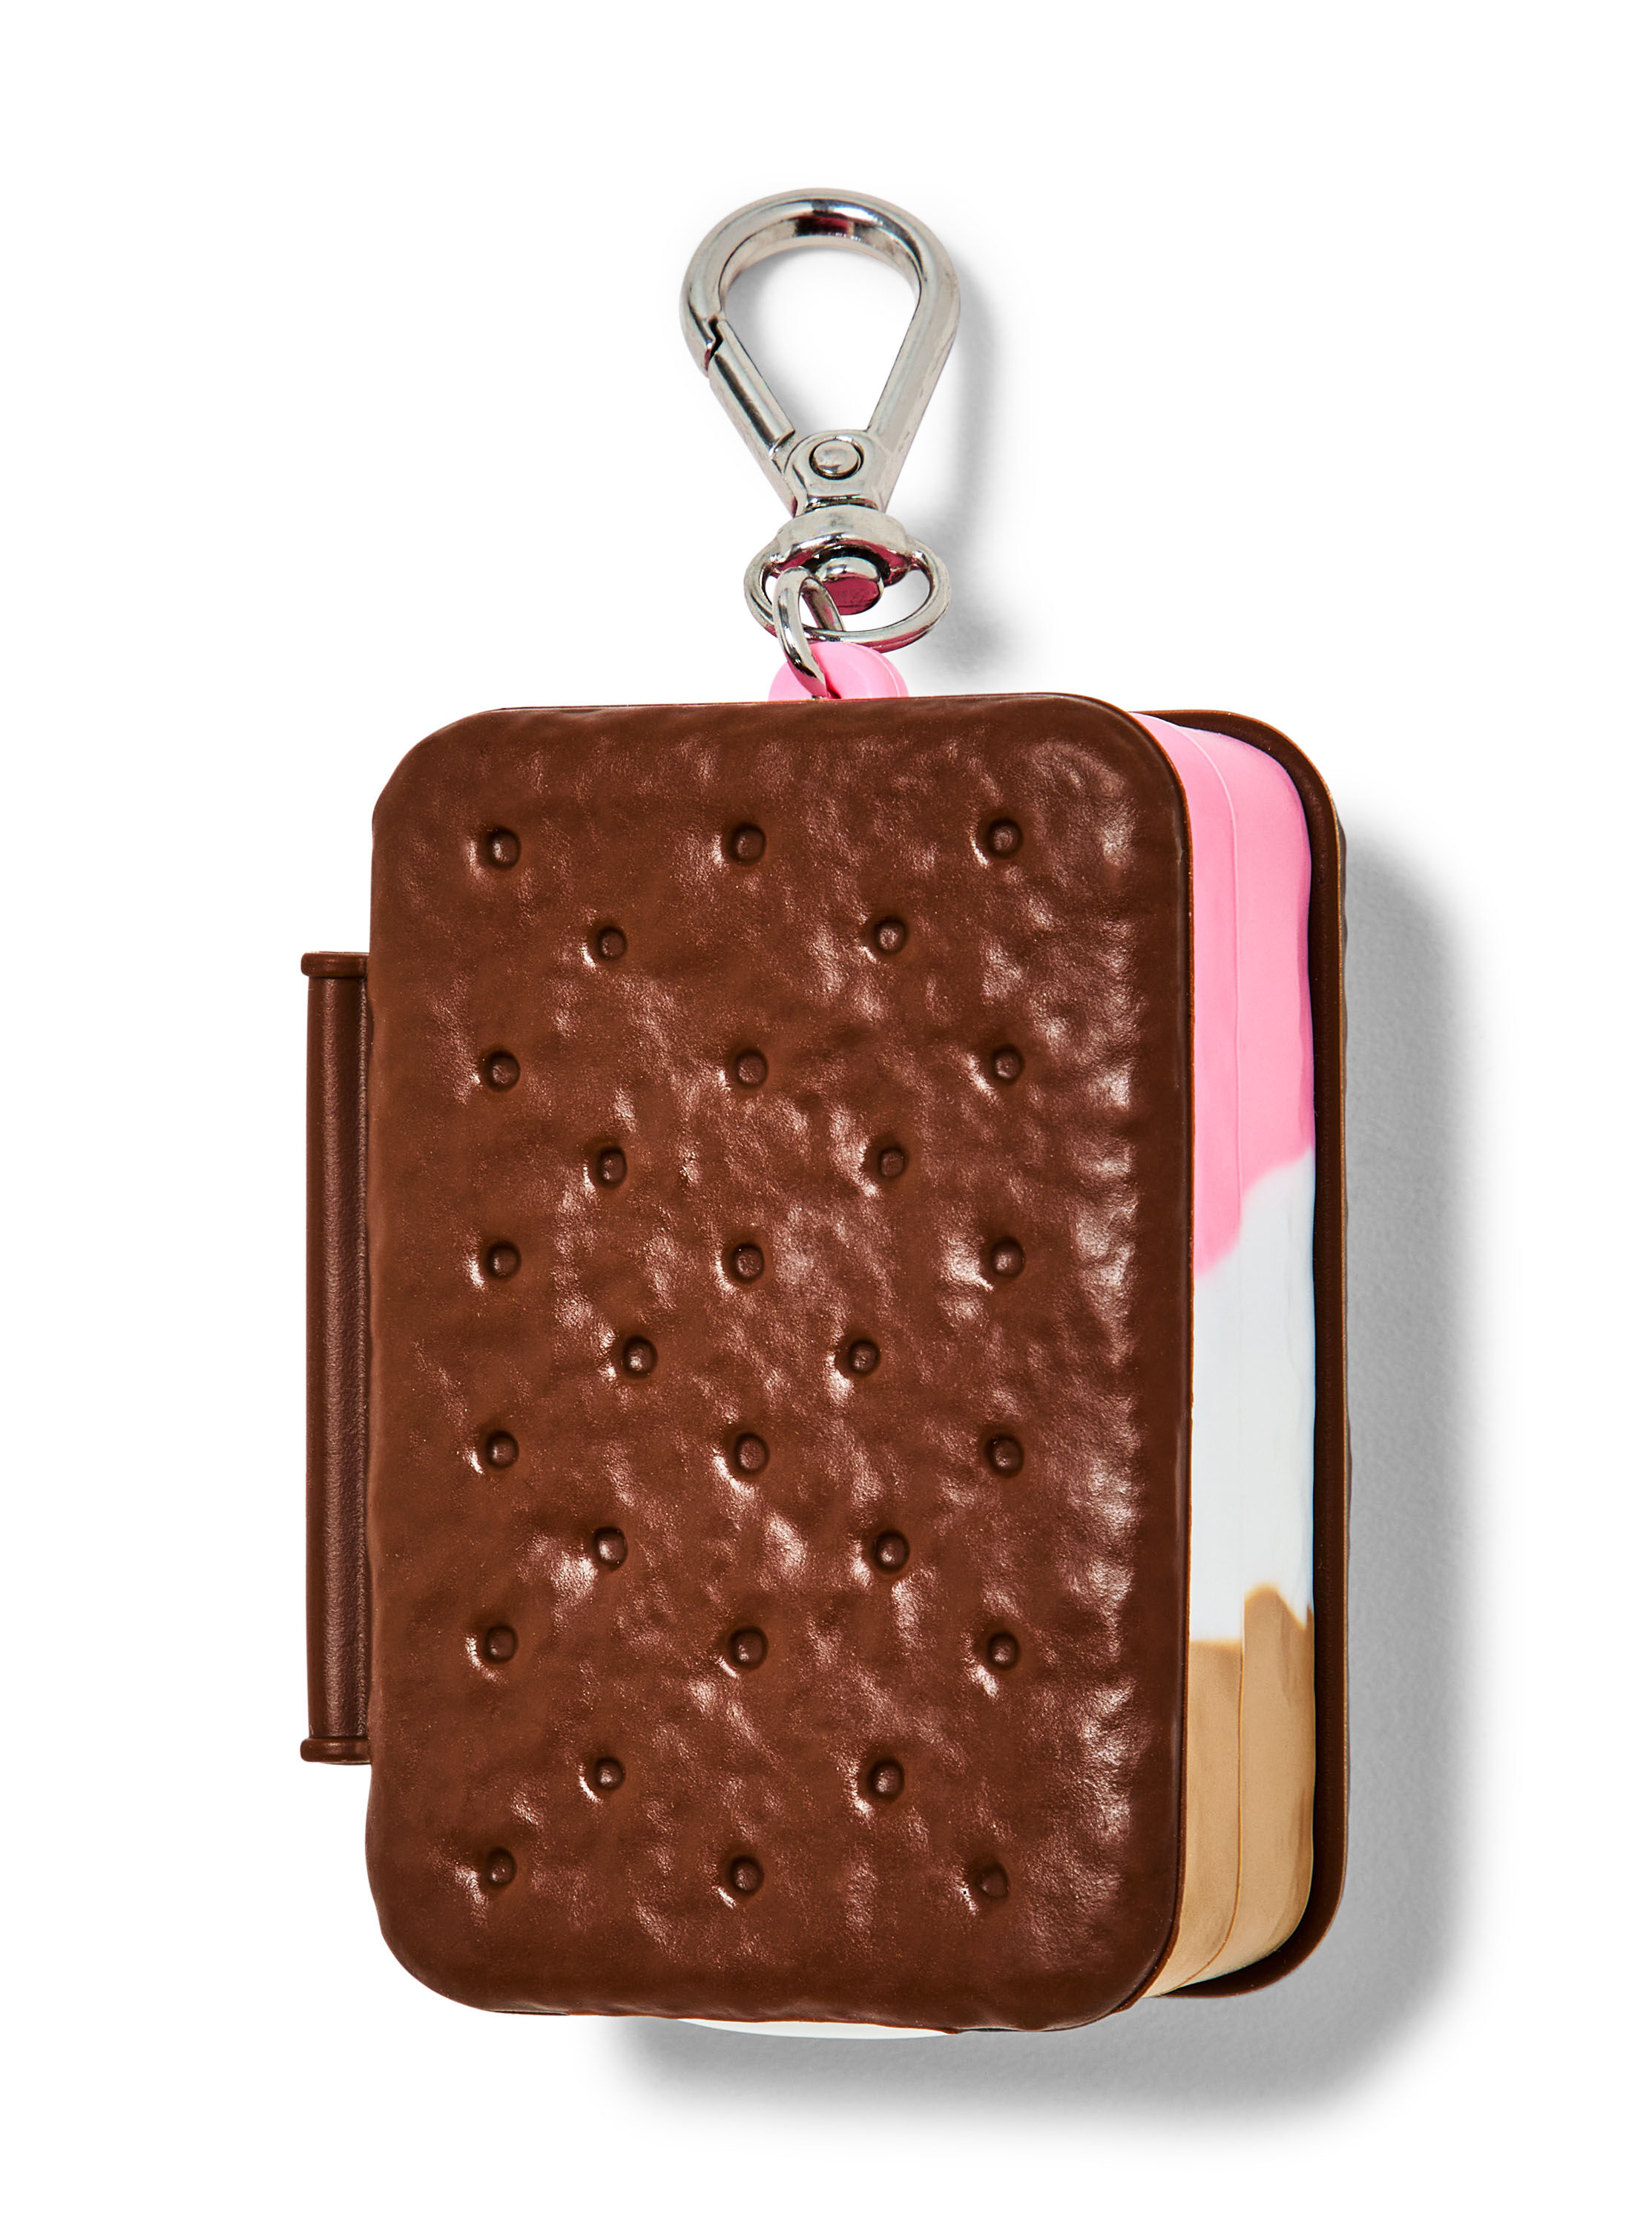 Ice Cream Sandwich PocketBac Holder